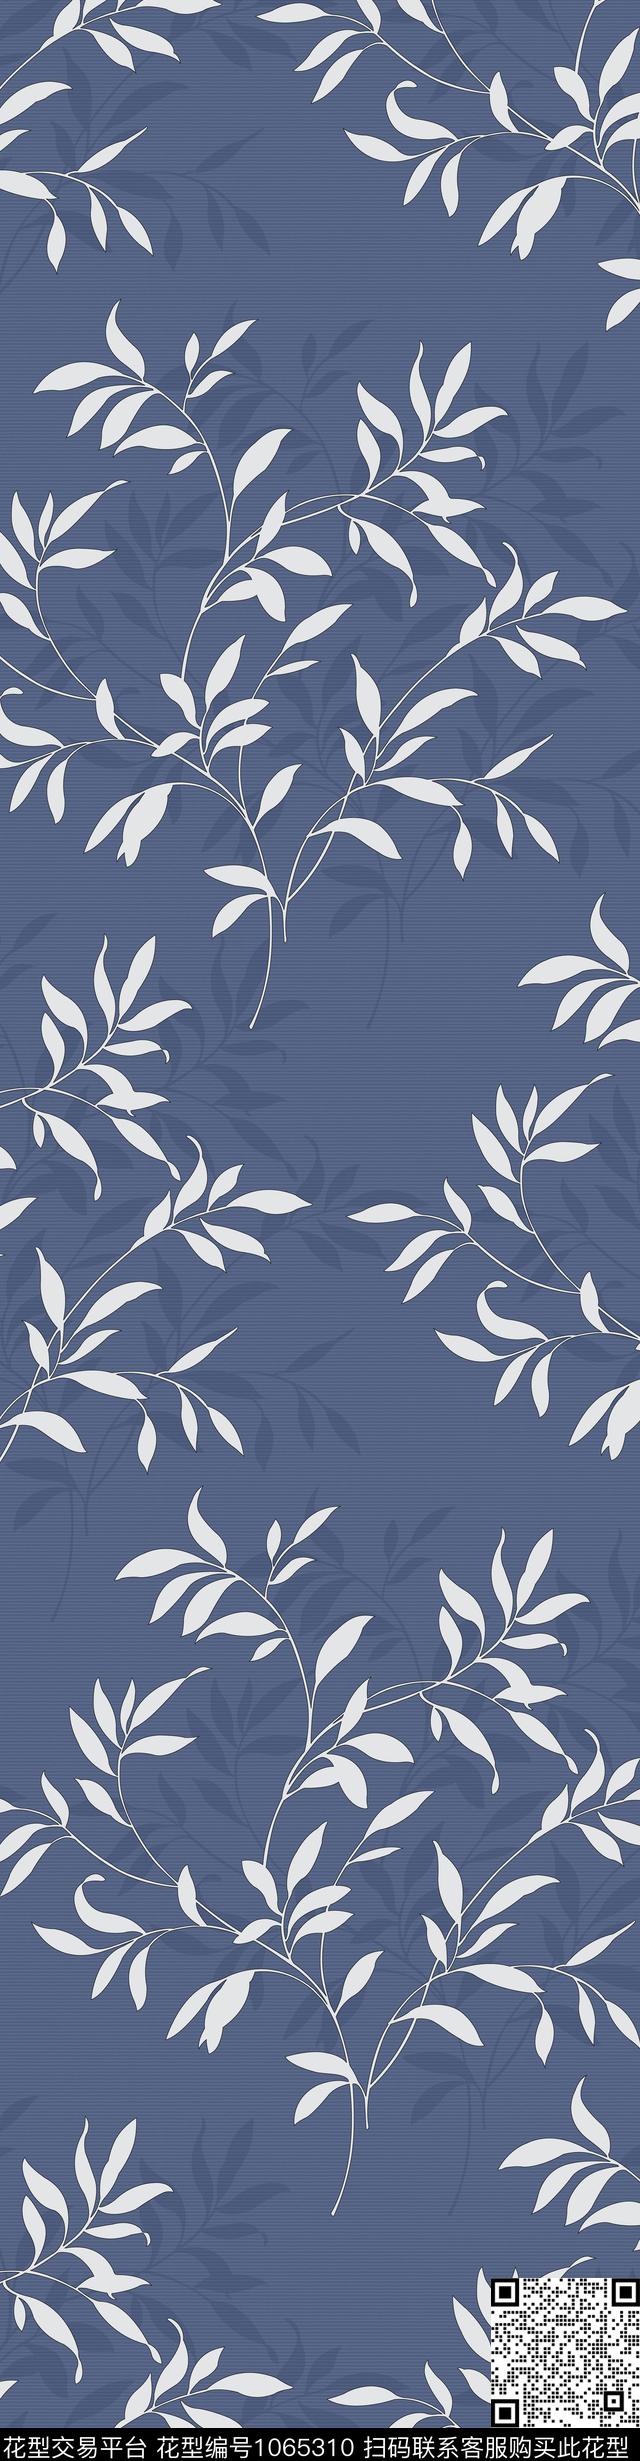 H00001.jpg - 1065310 - 传统花型 植物 绿植树叶 - 传统印花花型 － 床品花型设计 － 瓦栏